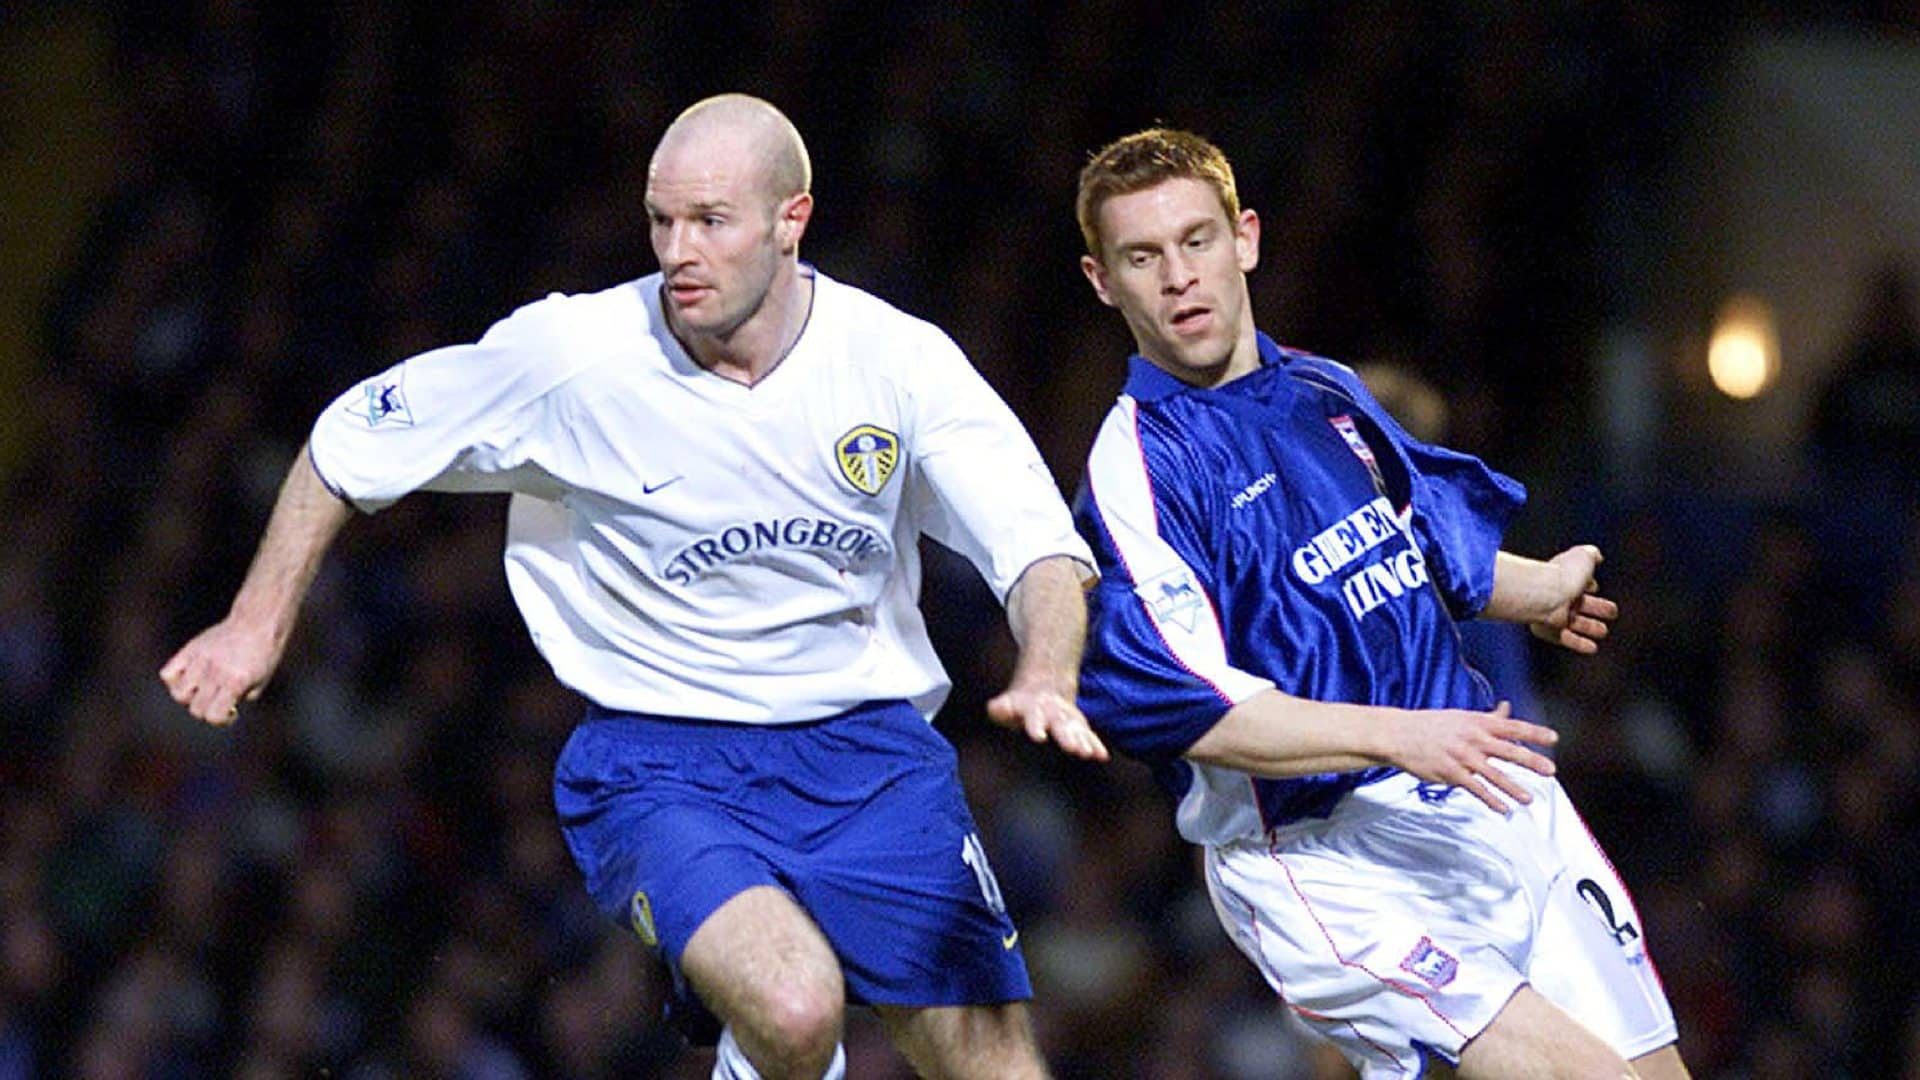 Danny Mills (white shirt, blue shorts) protecting the ball from Richard Naylor (blue shirt, white shorts) at Portman Road in 2001